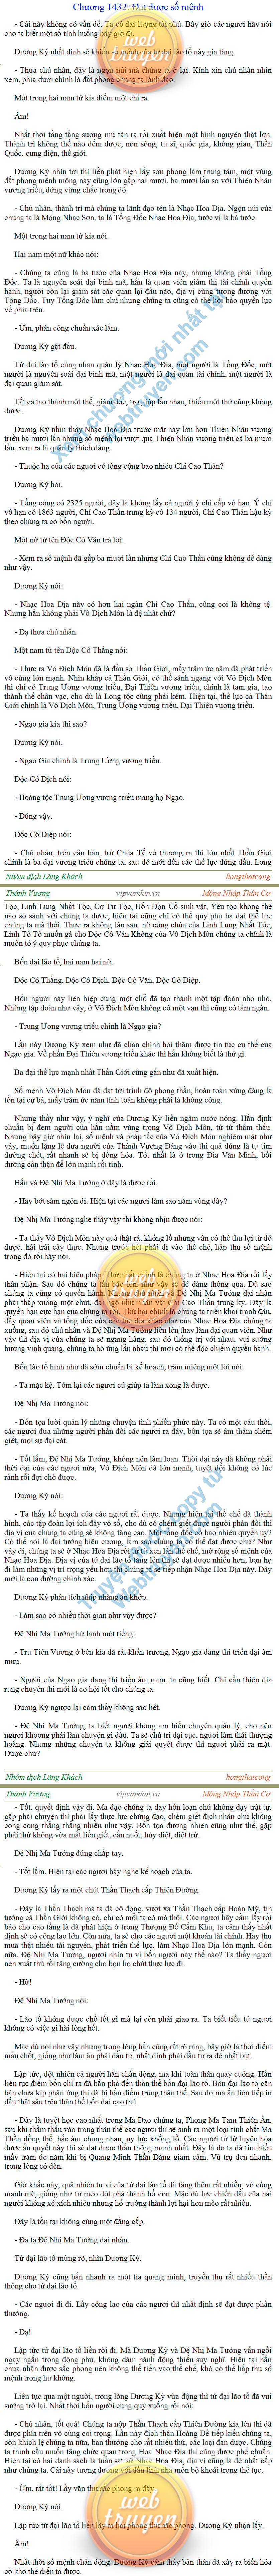 Thanh-vuong-1432.png